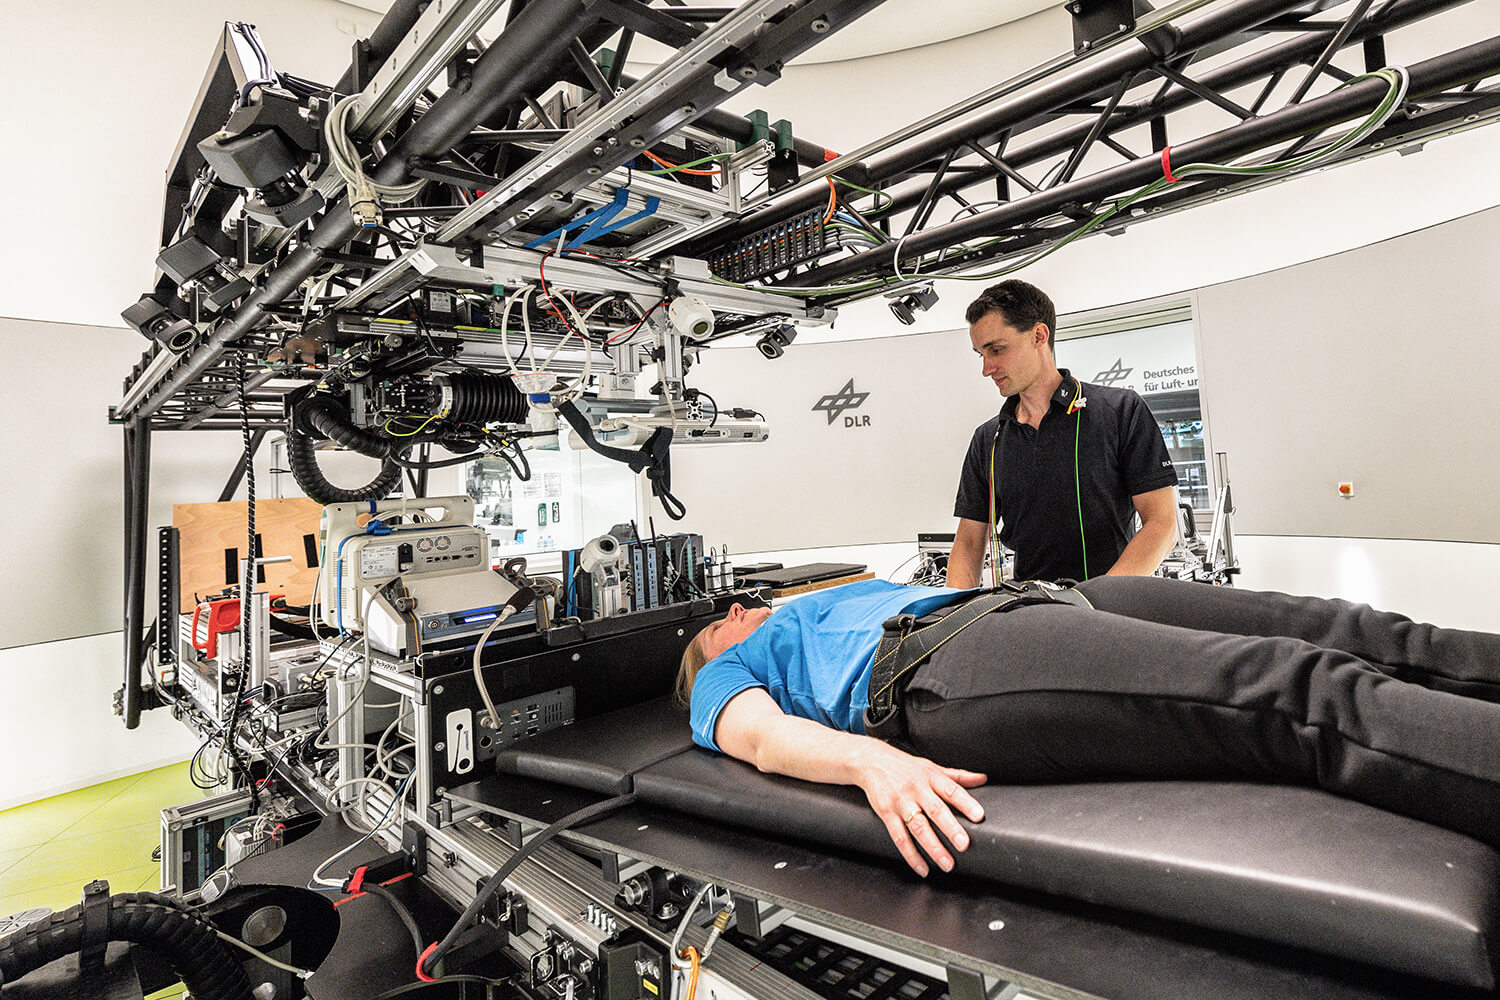 The short-arm centrifuge at the German Aerospace Center's Institute of Aerospace Medicine. Images courtesy of the German Aerospace Center.